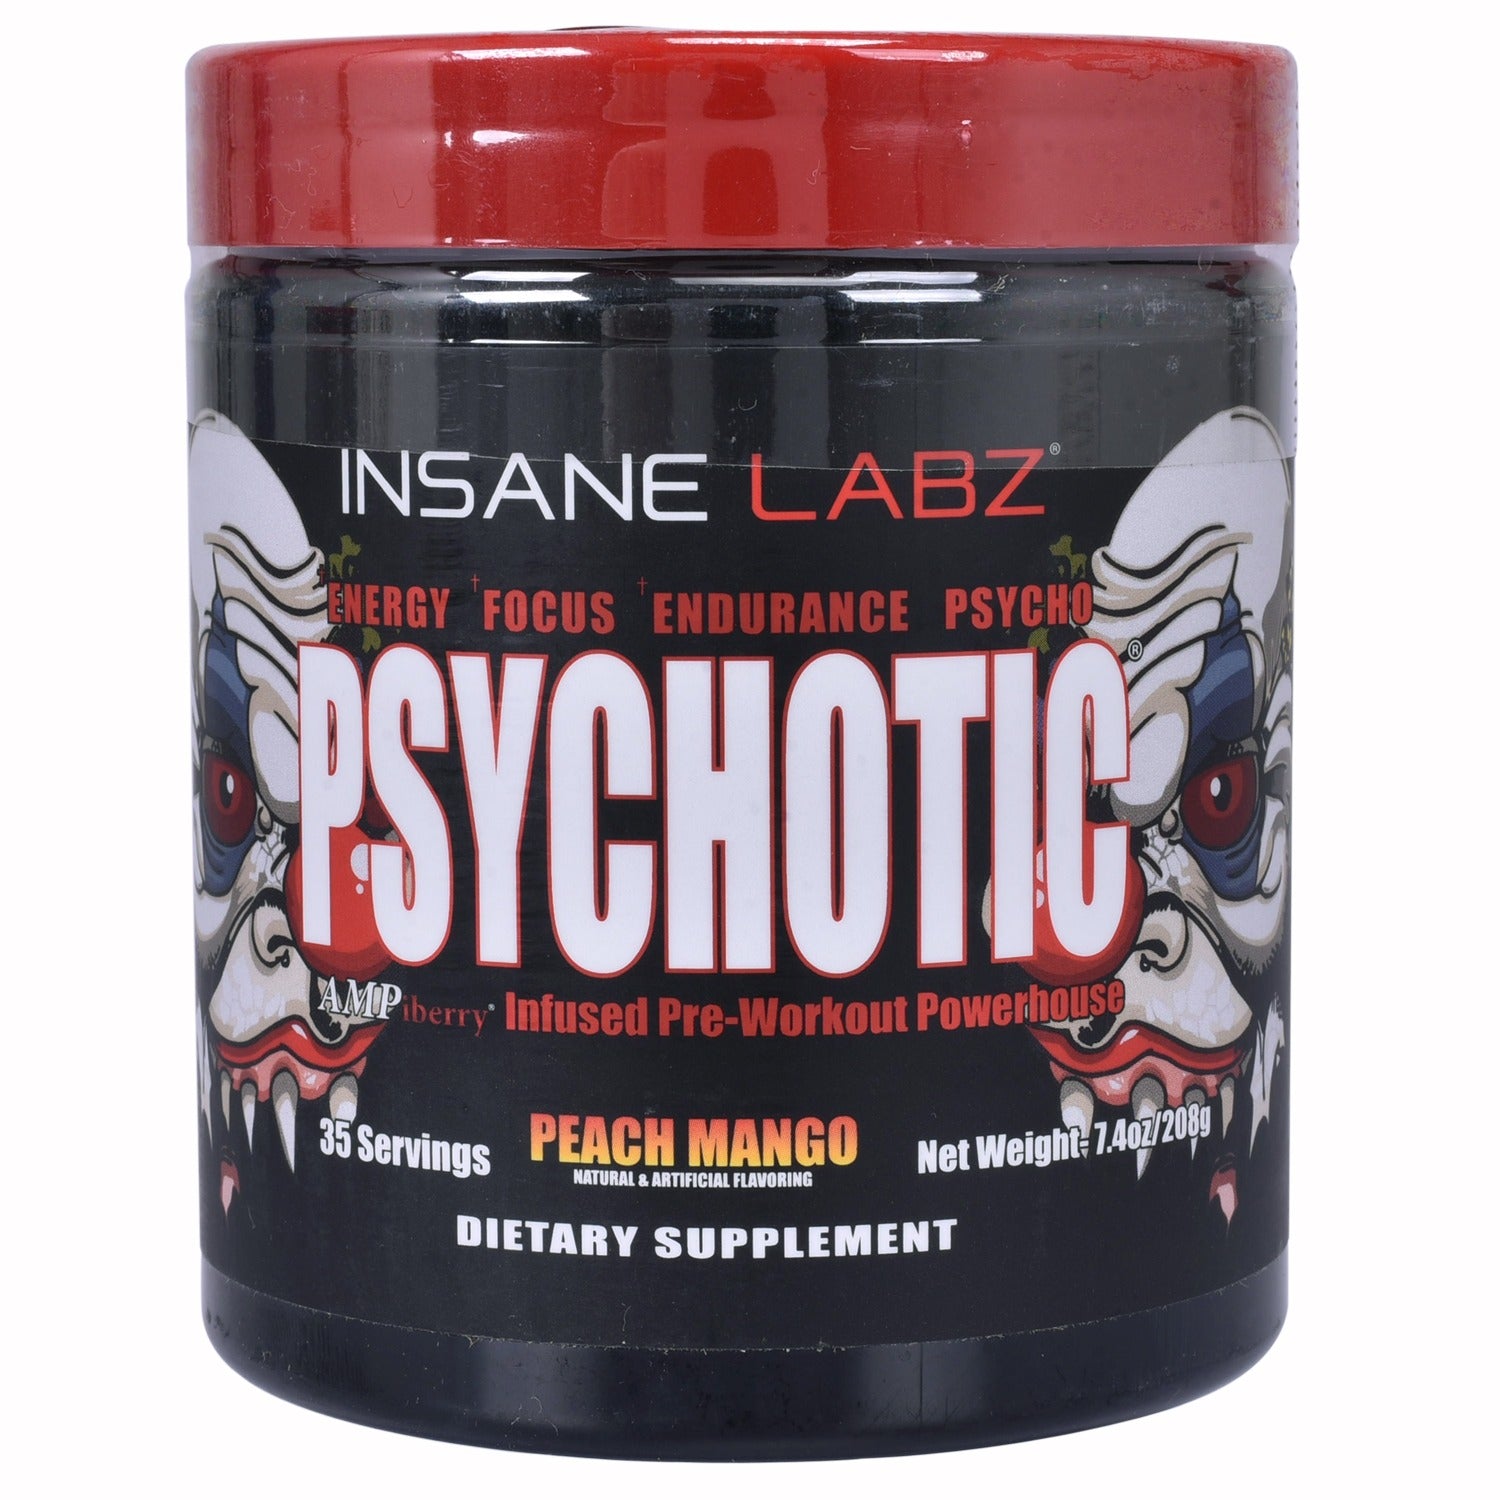 Insane Labs Psychotic Pre-workout | 35 Servings - Insane Labz - IL_Psychotic_PM